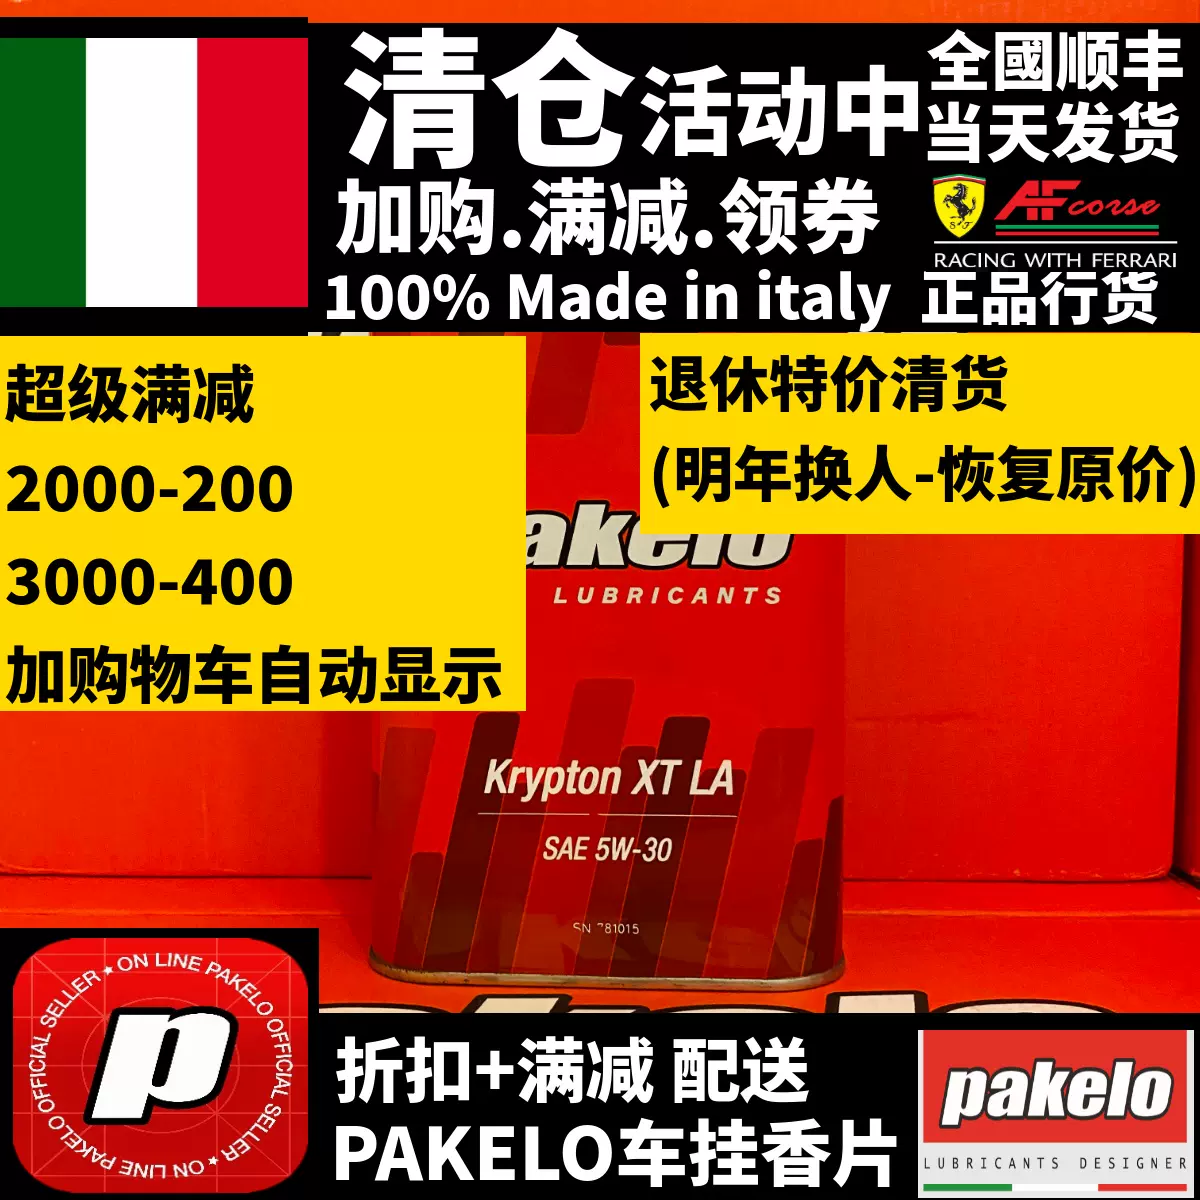 Pakelo机油/Krypton XT 5W30/高性能/意大利原装/1升/全國包邮-Taobao